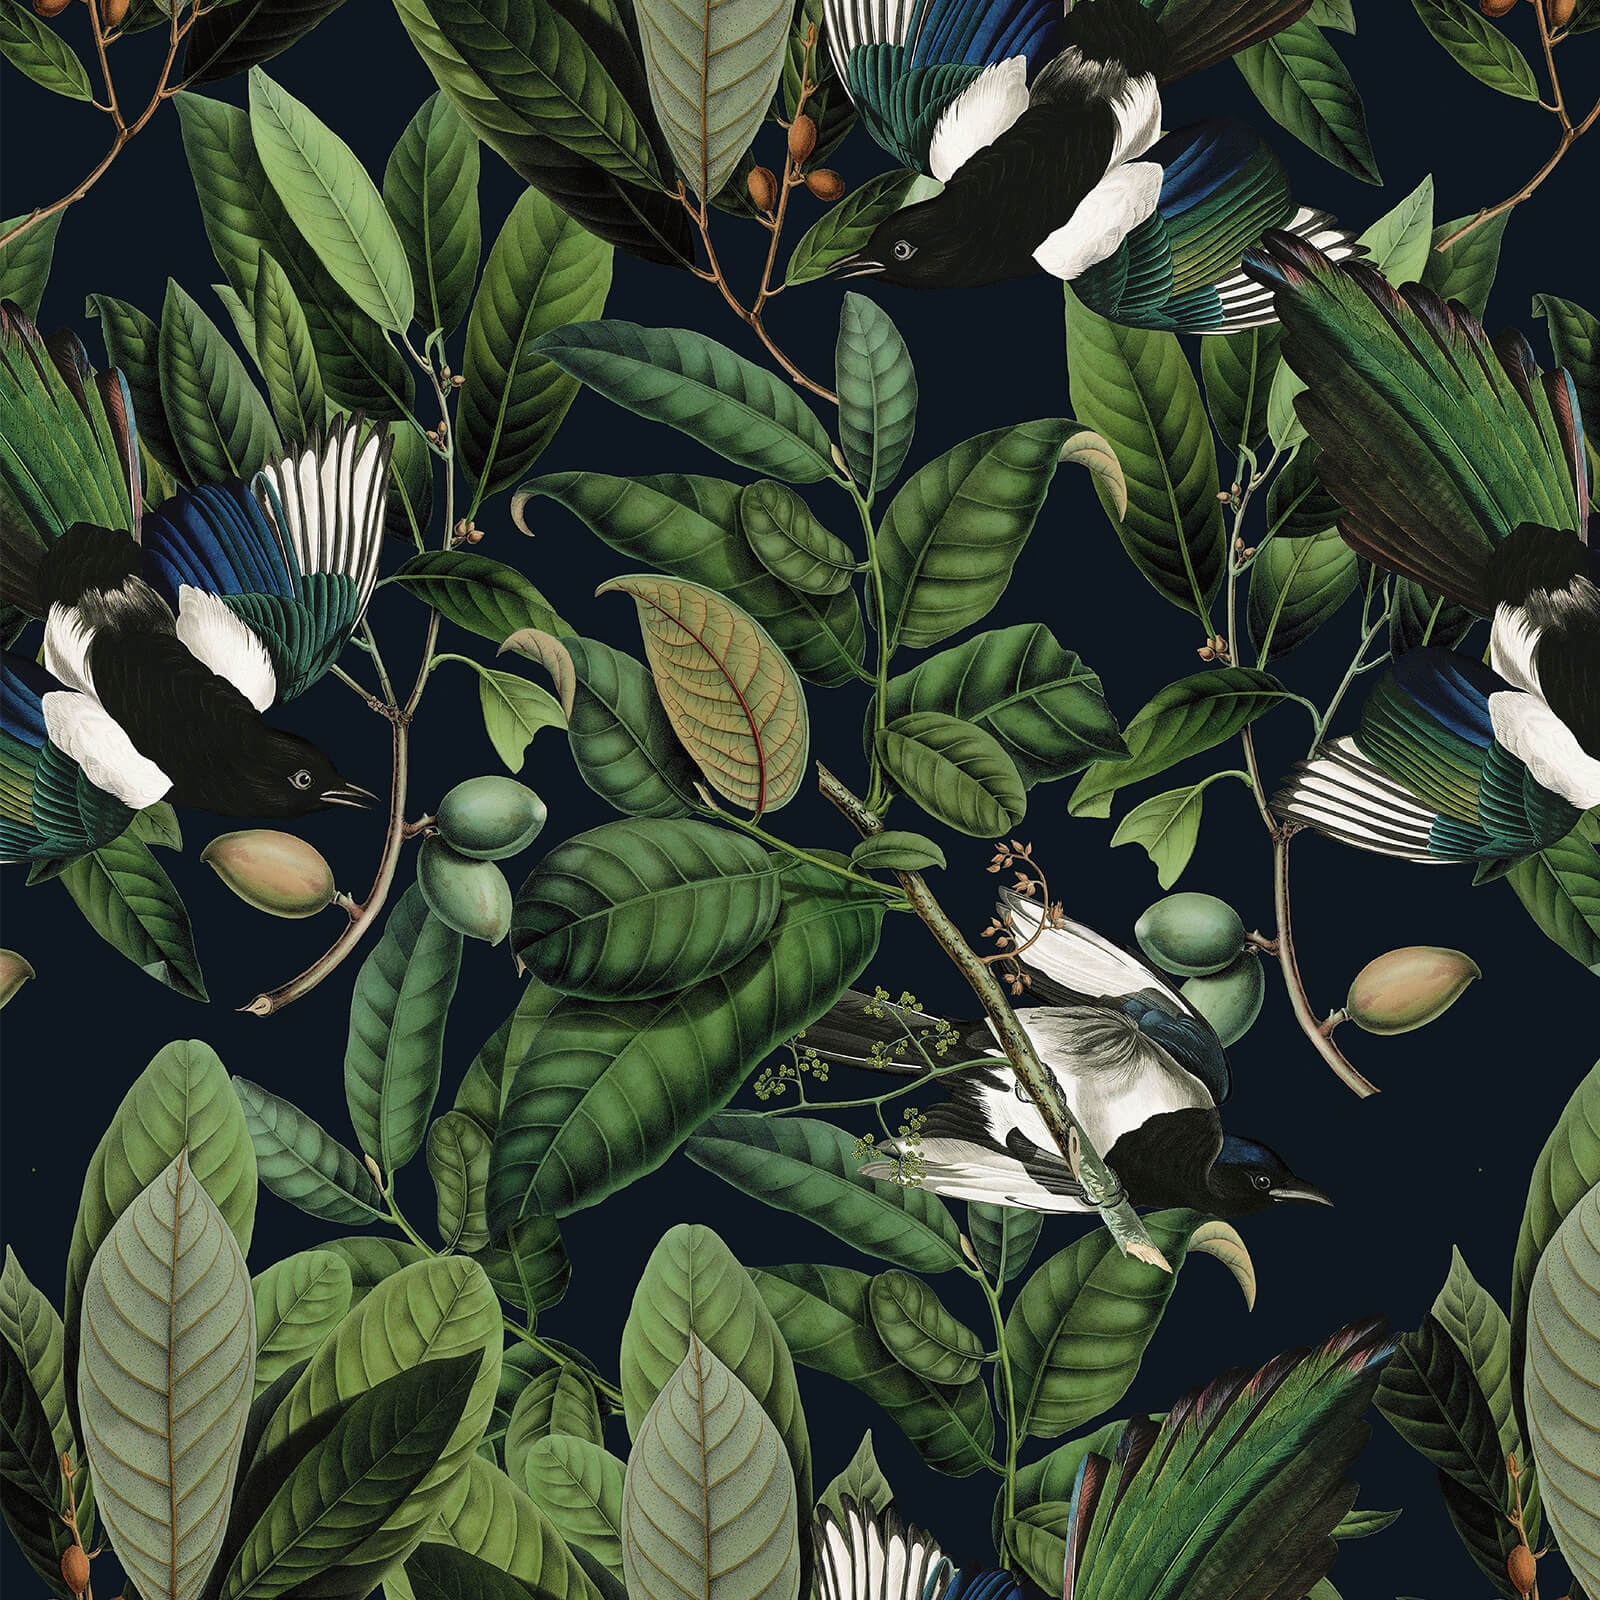 VEELIKE Abstract Teal Green Floral Wallpaper – Veelike